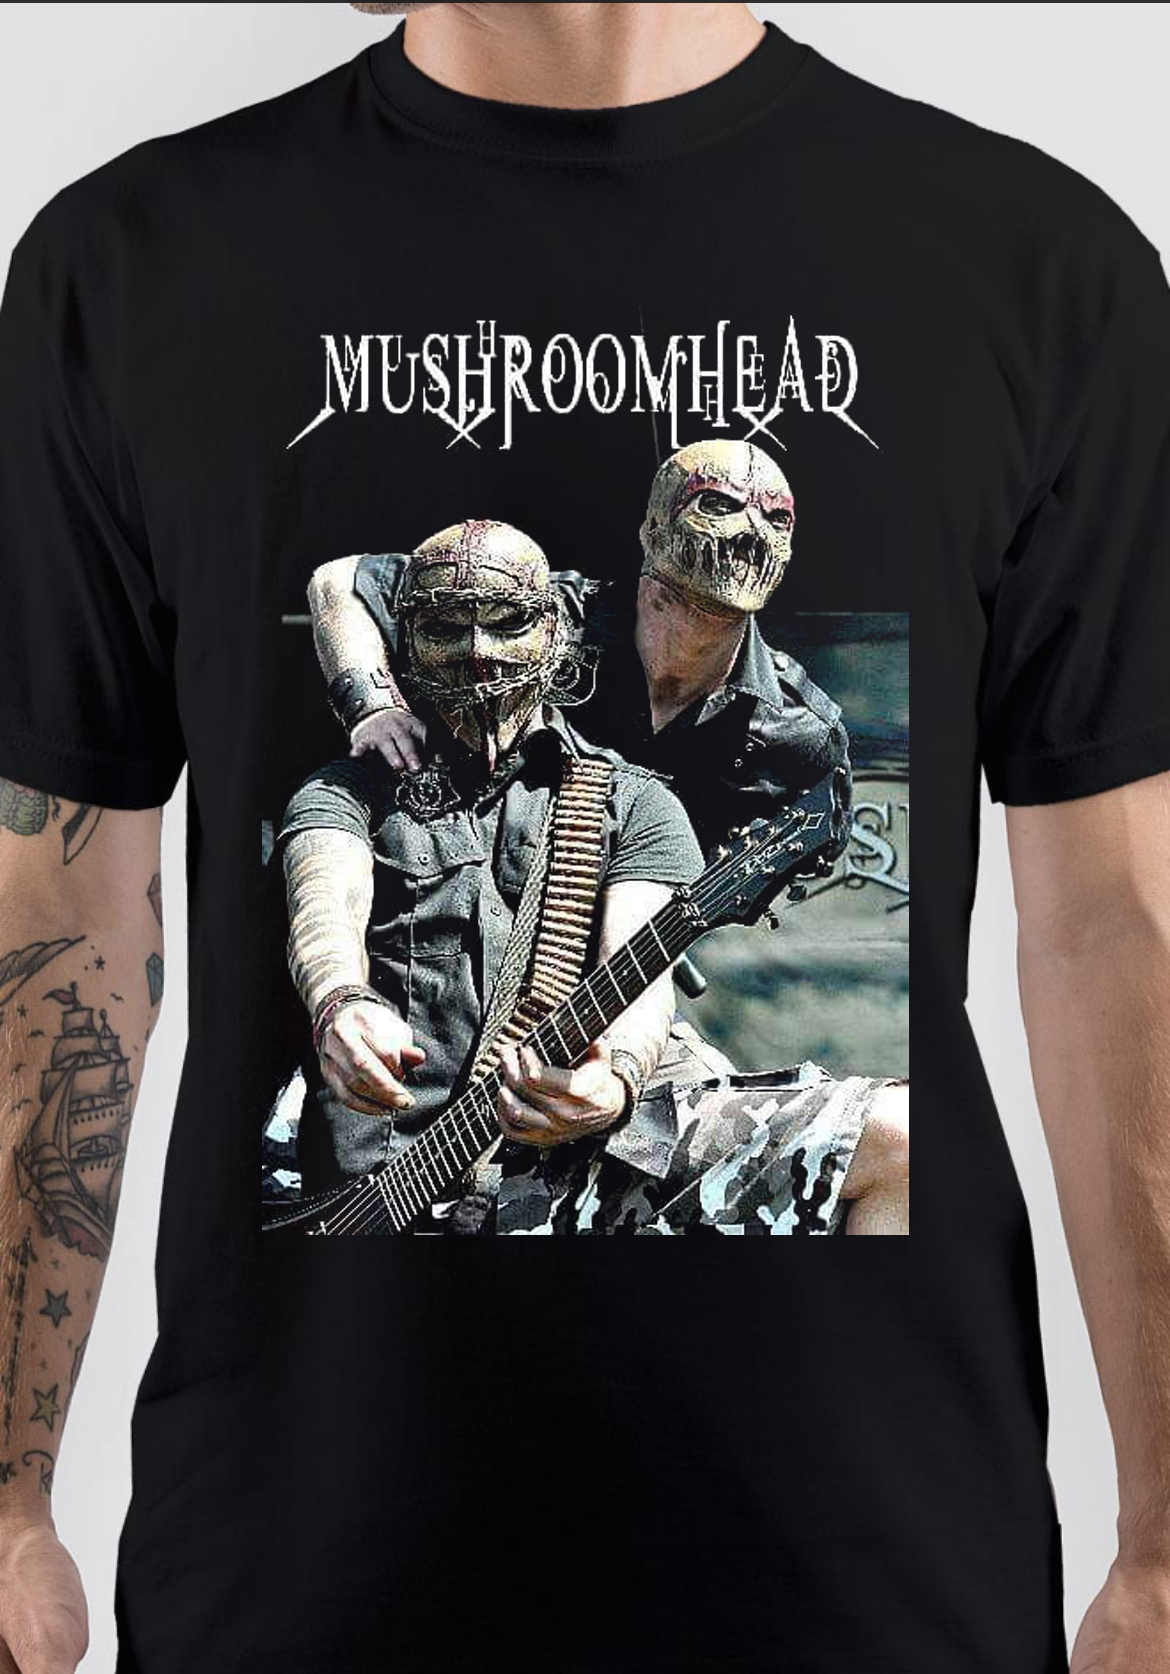 Mushroomhead T-Shirt And Merchandise